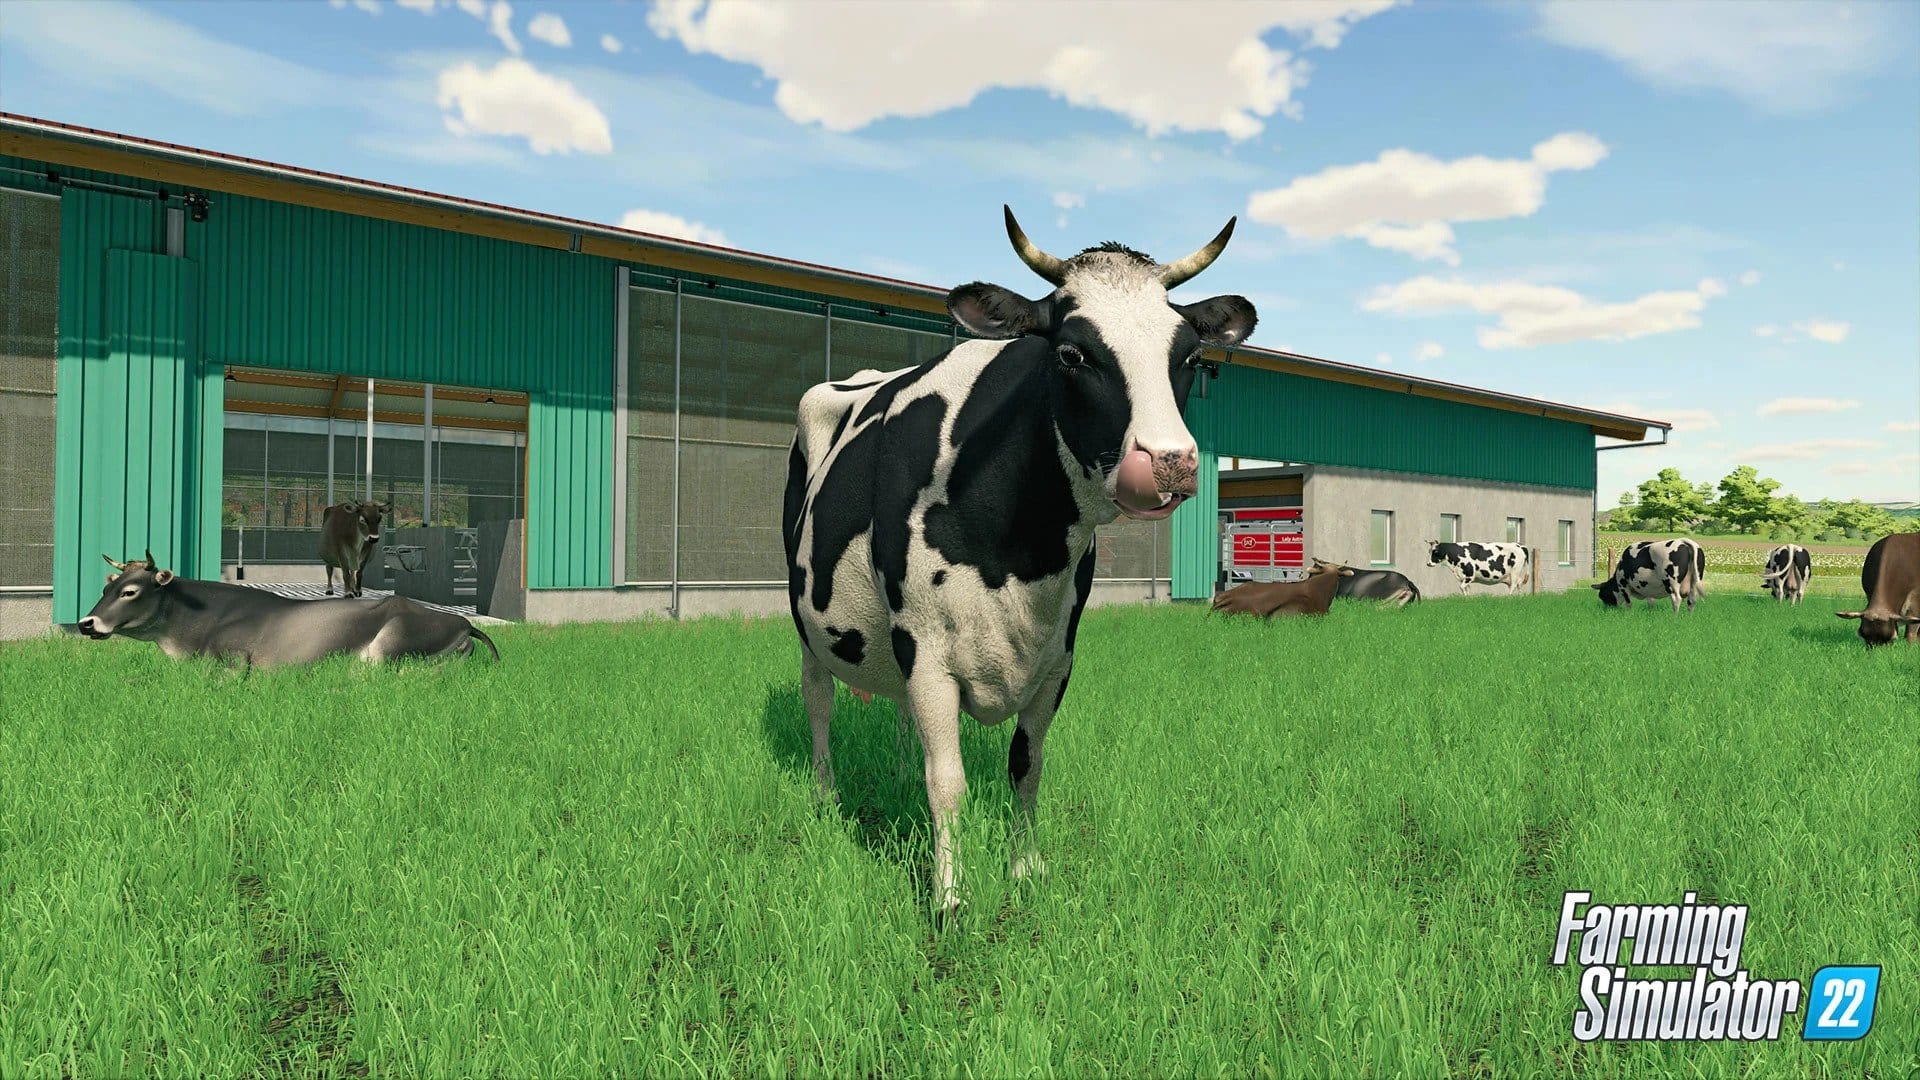 Farming Simulator 22 update 1.15